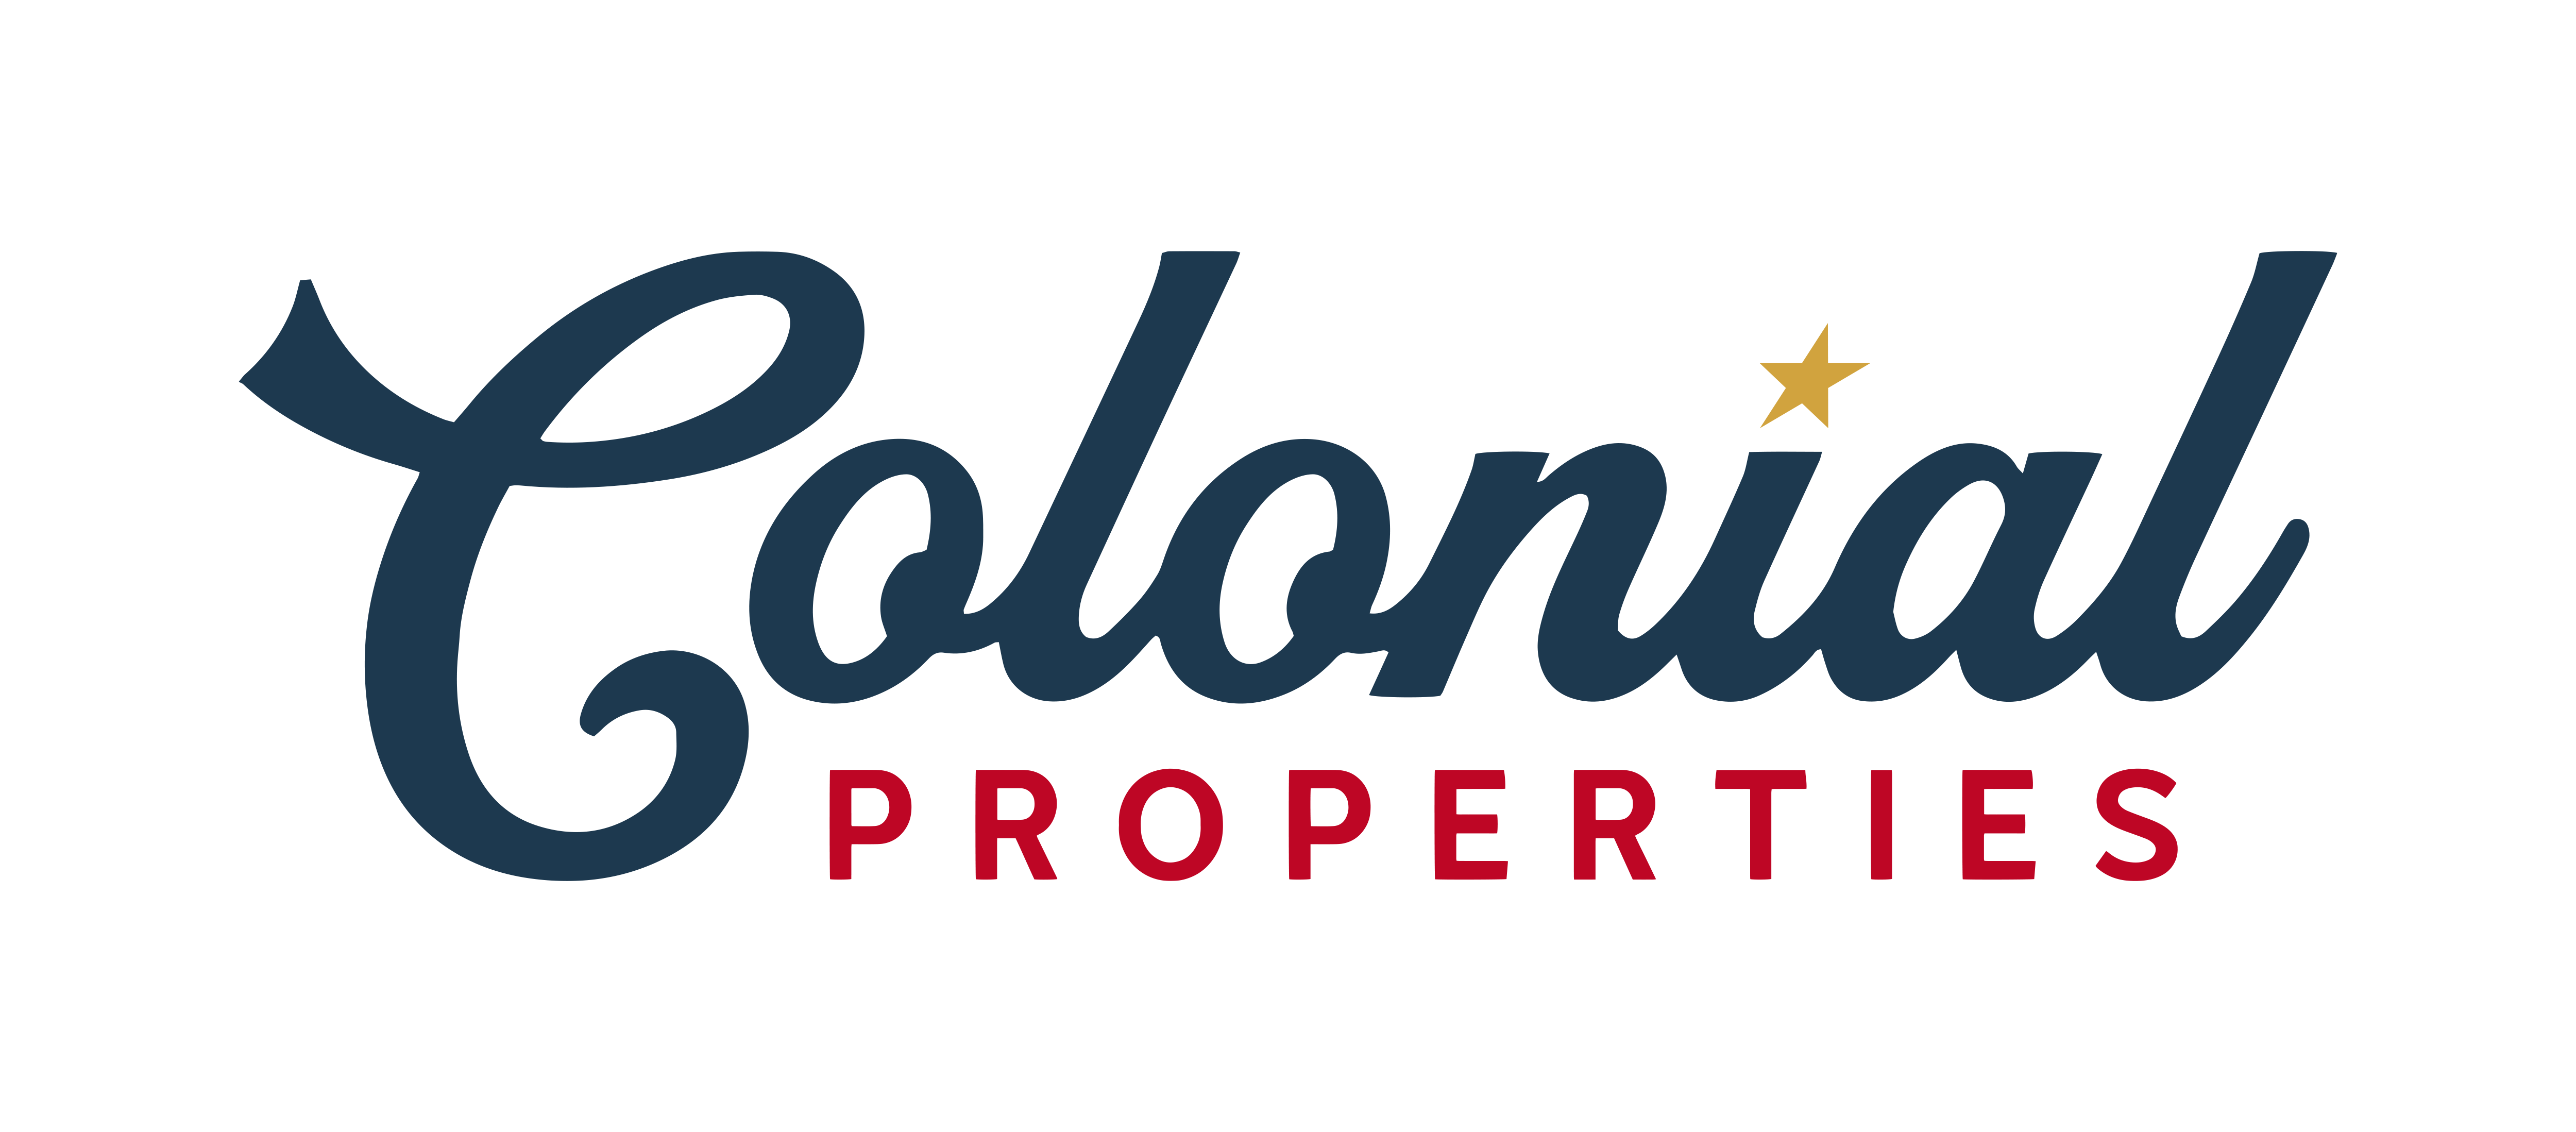 Colonial Properties logo